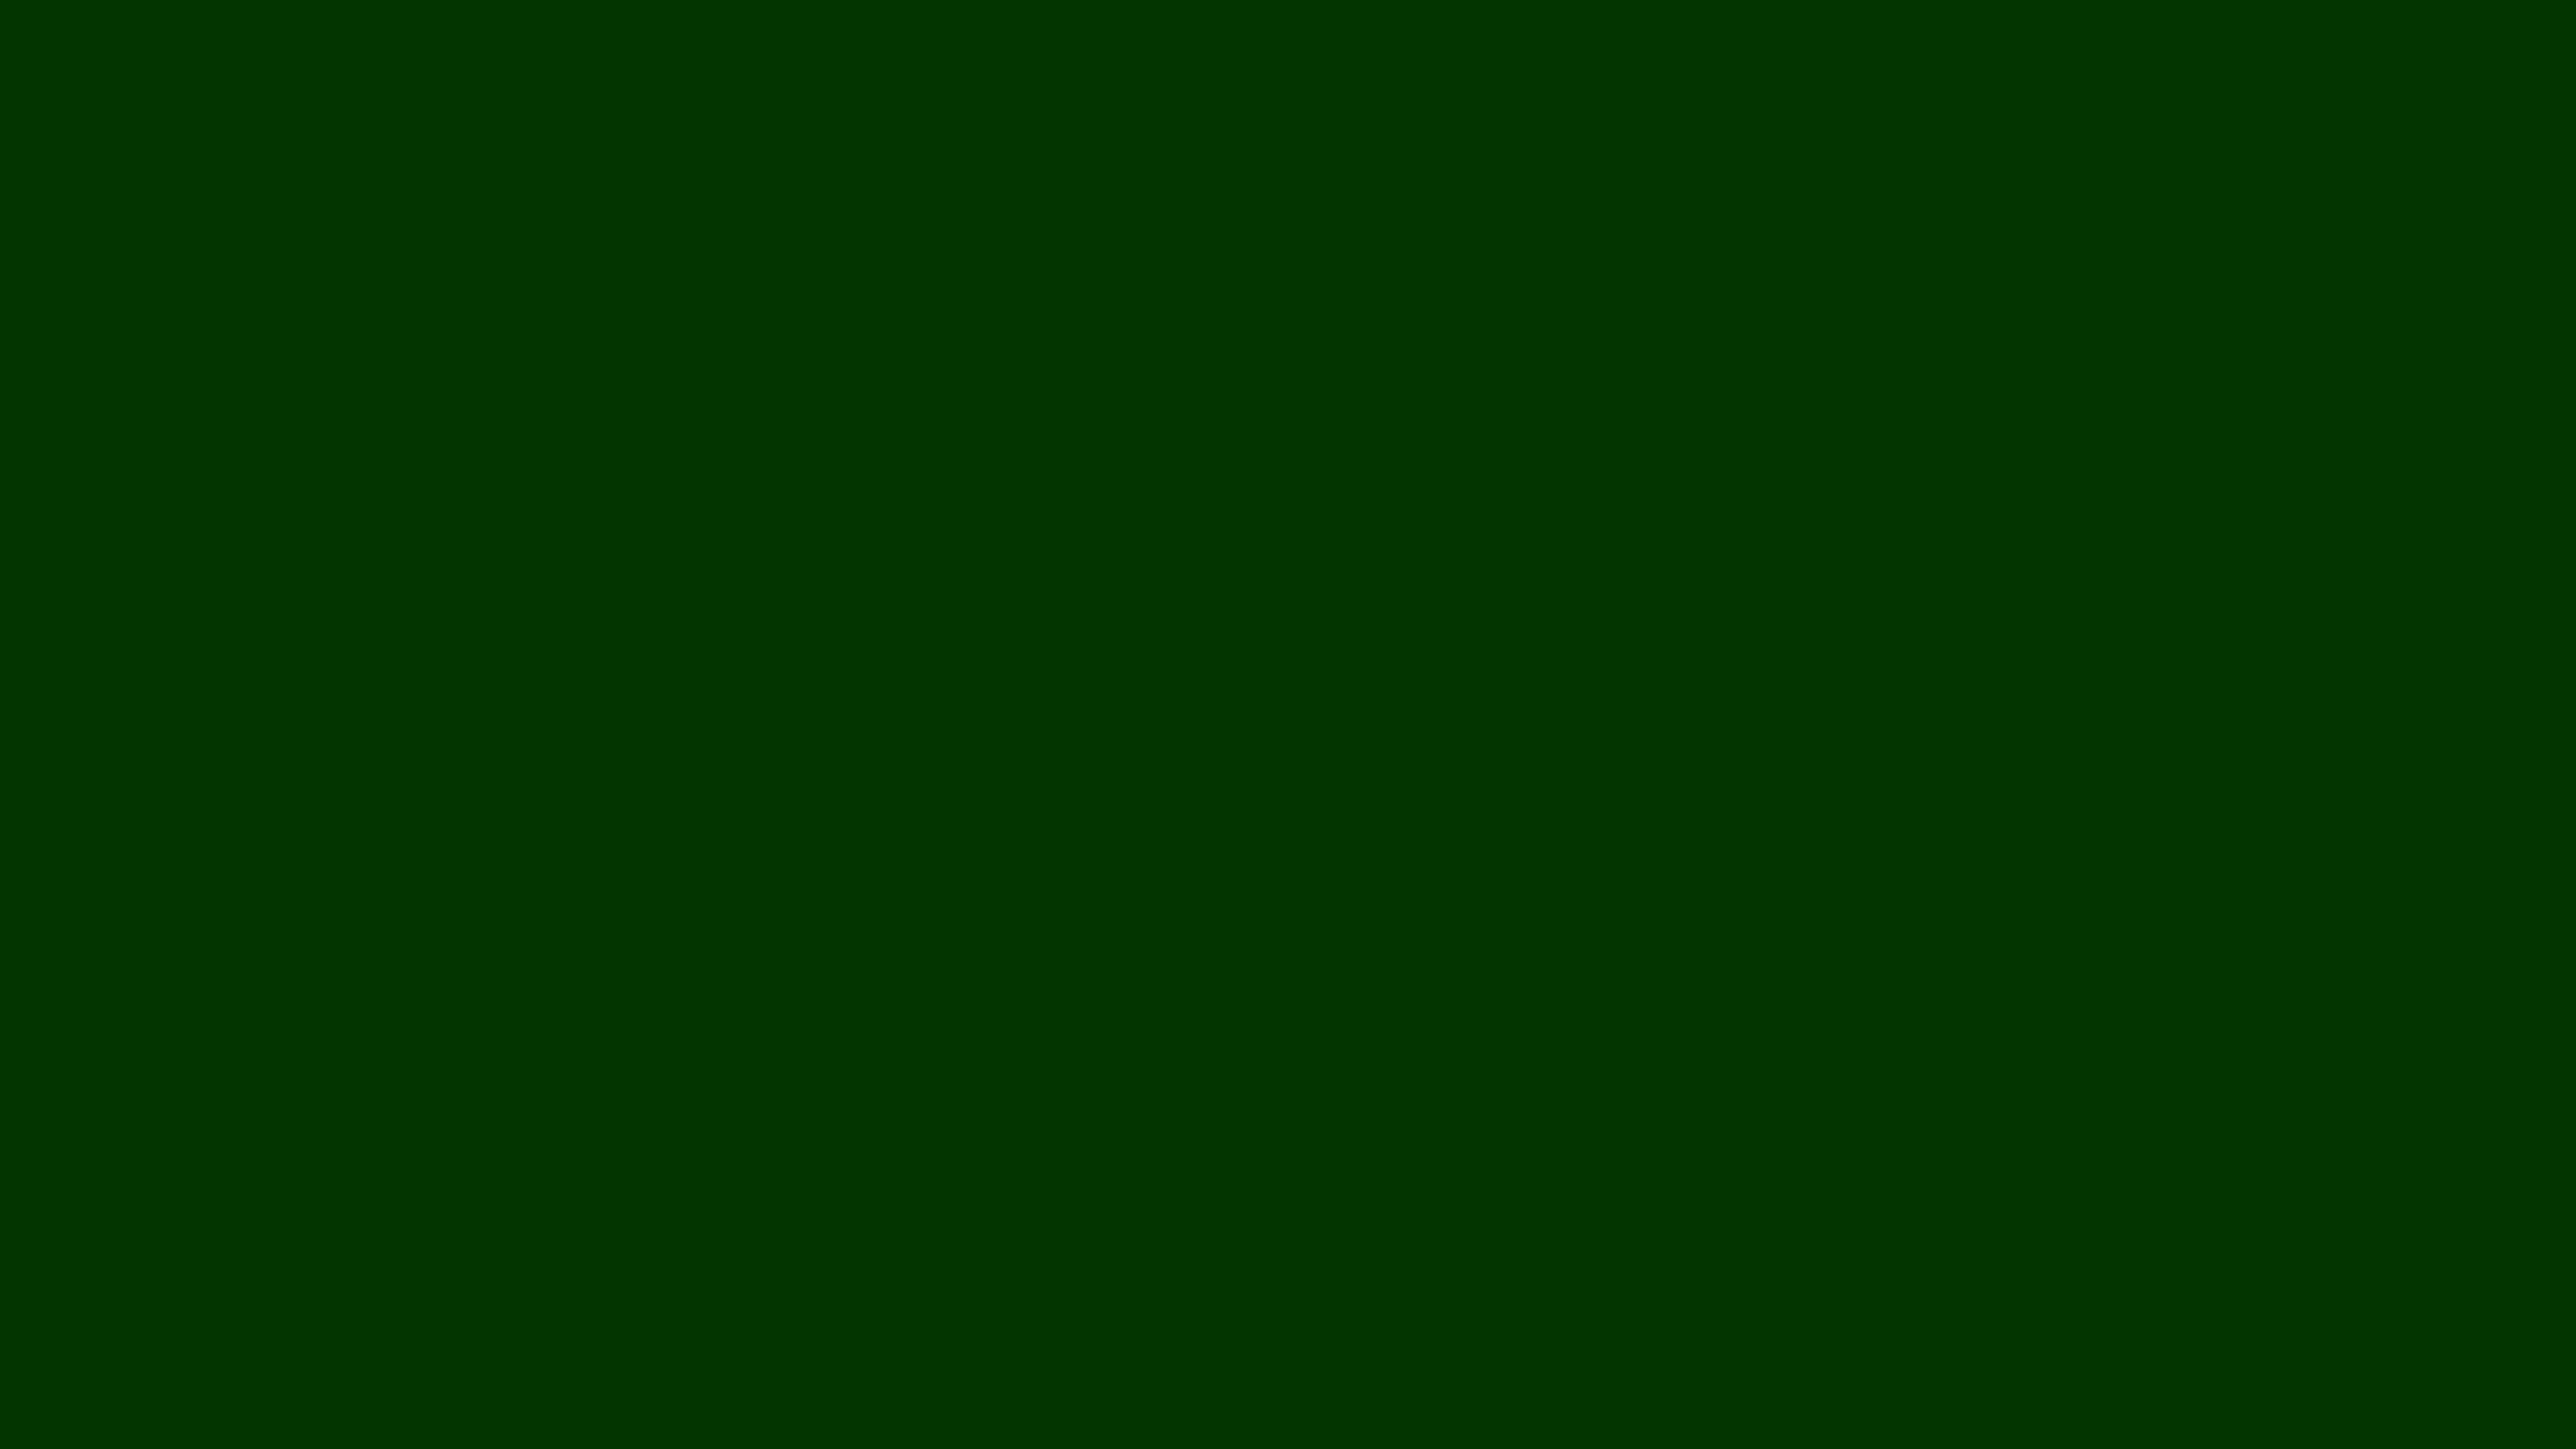 Dark Green Solid Color Background Image | Free Image Generator